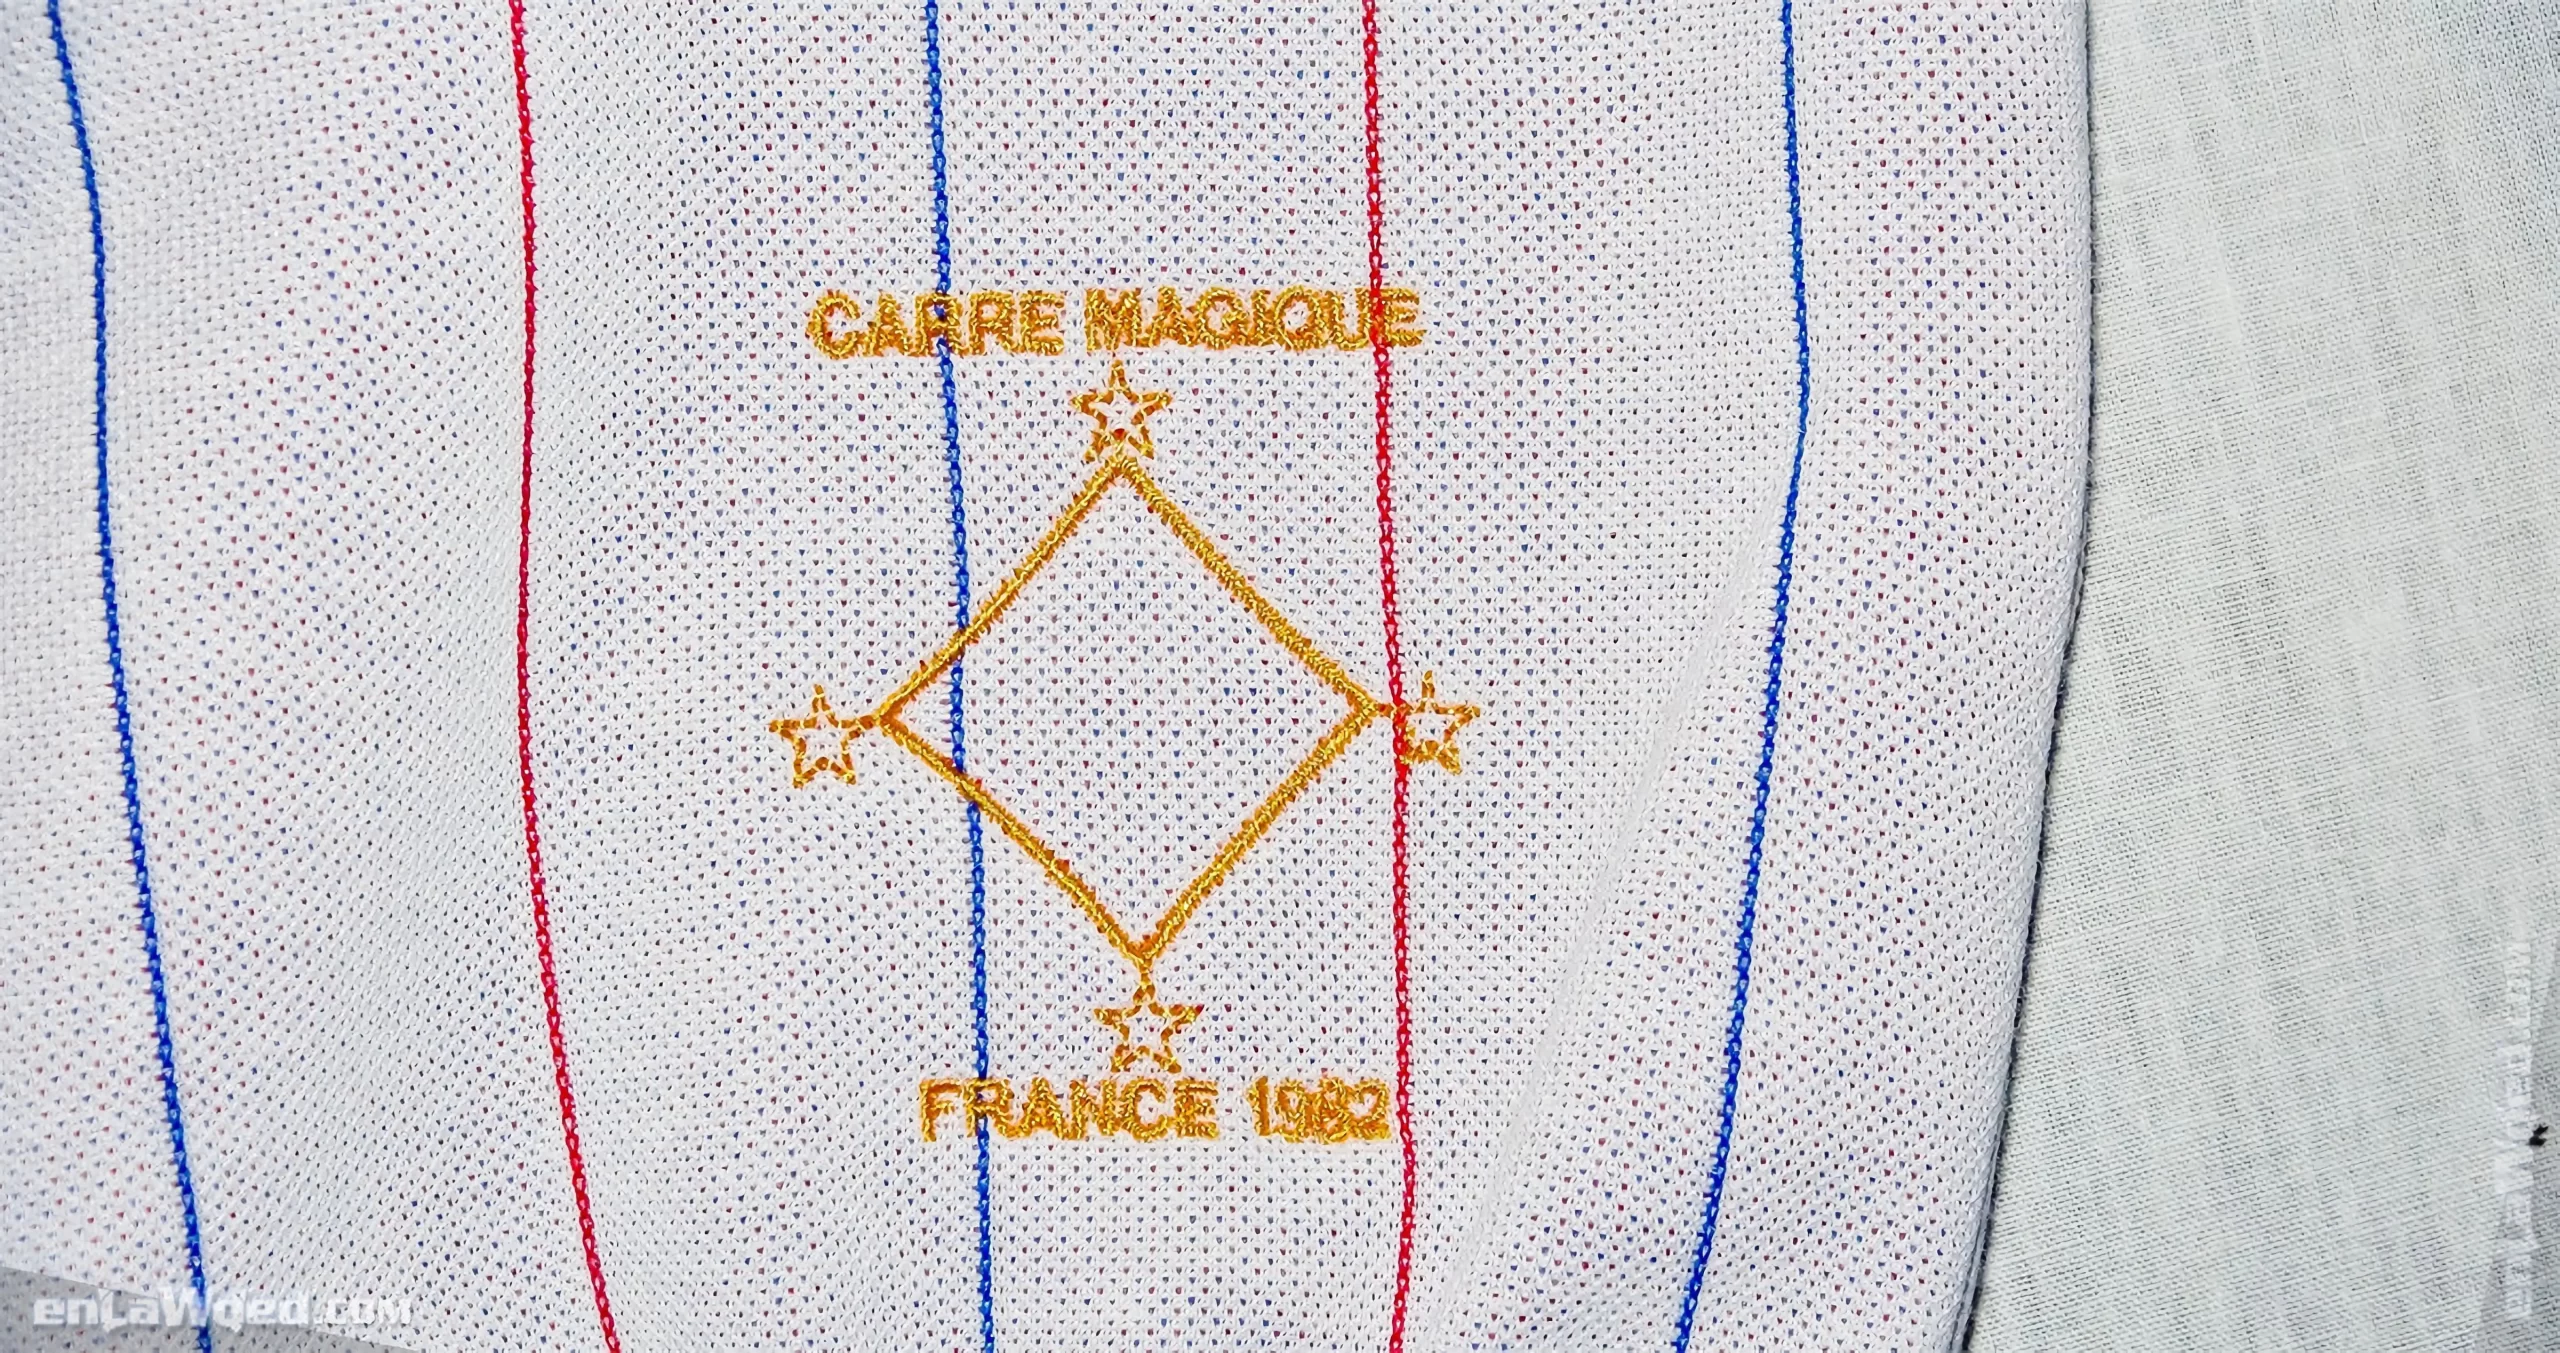 7th interior view of the Adidas Originals France Carré Magique 1982 Track Top